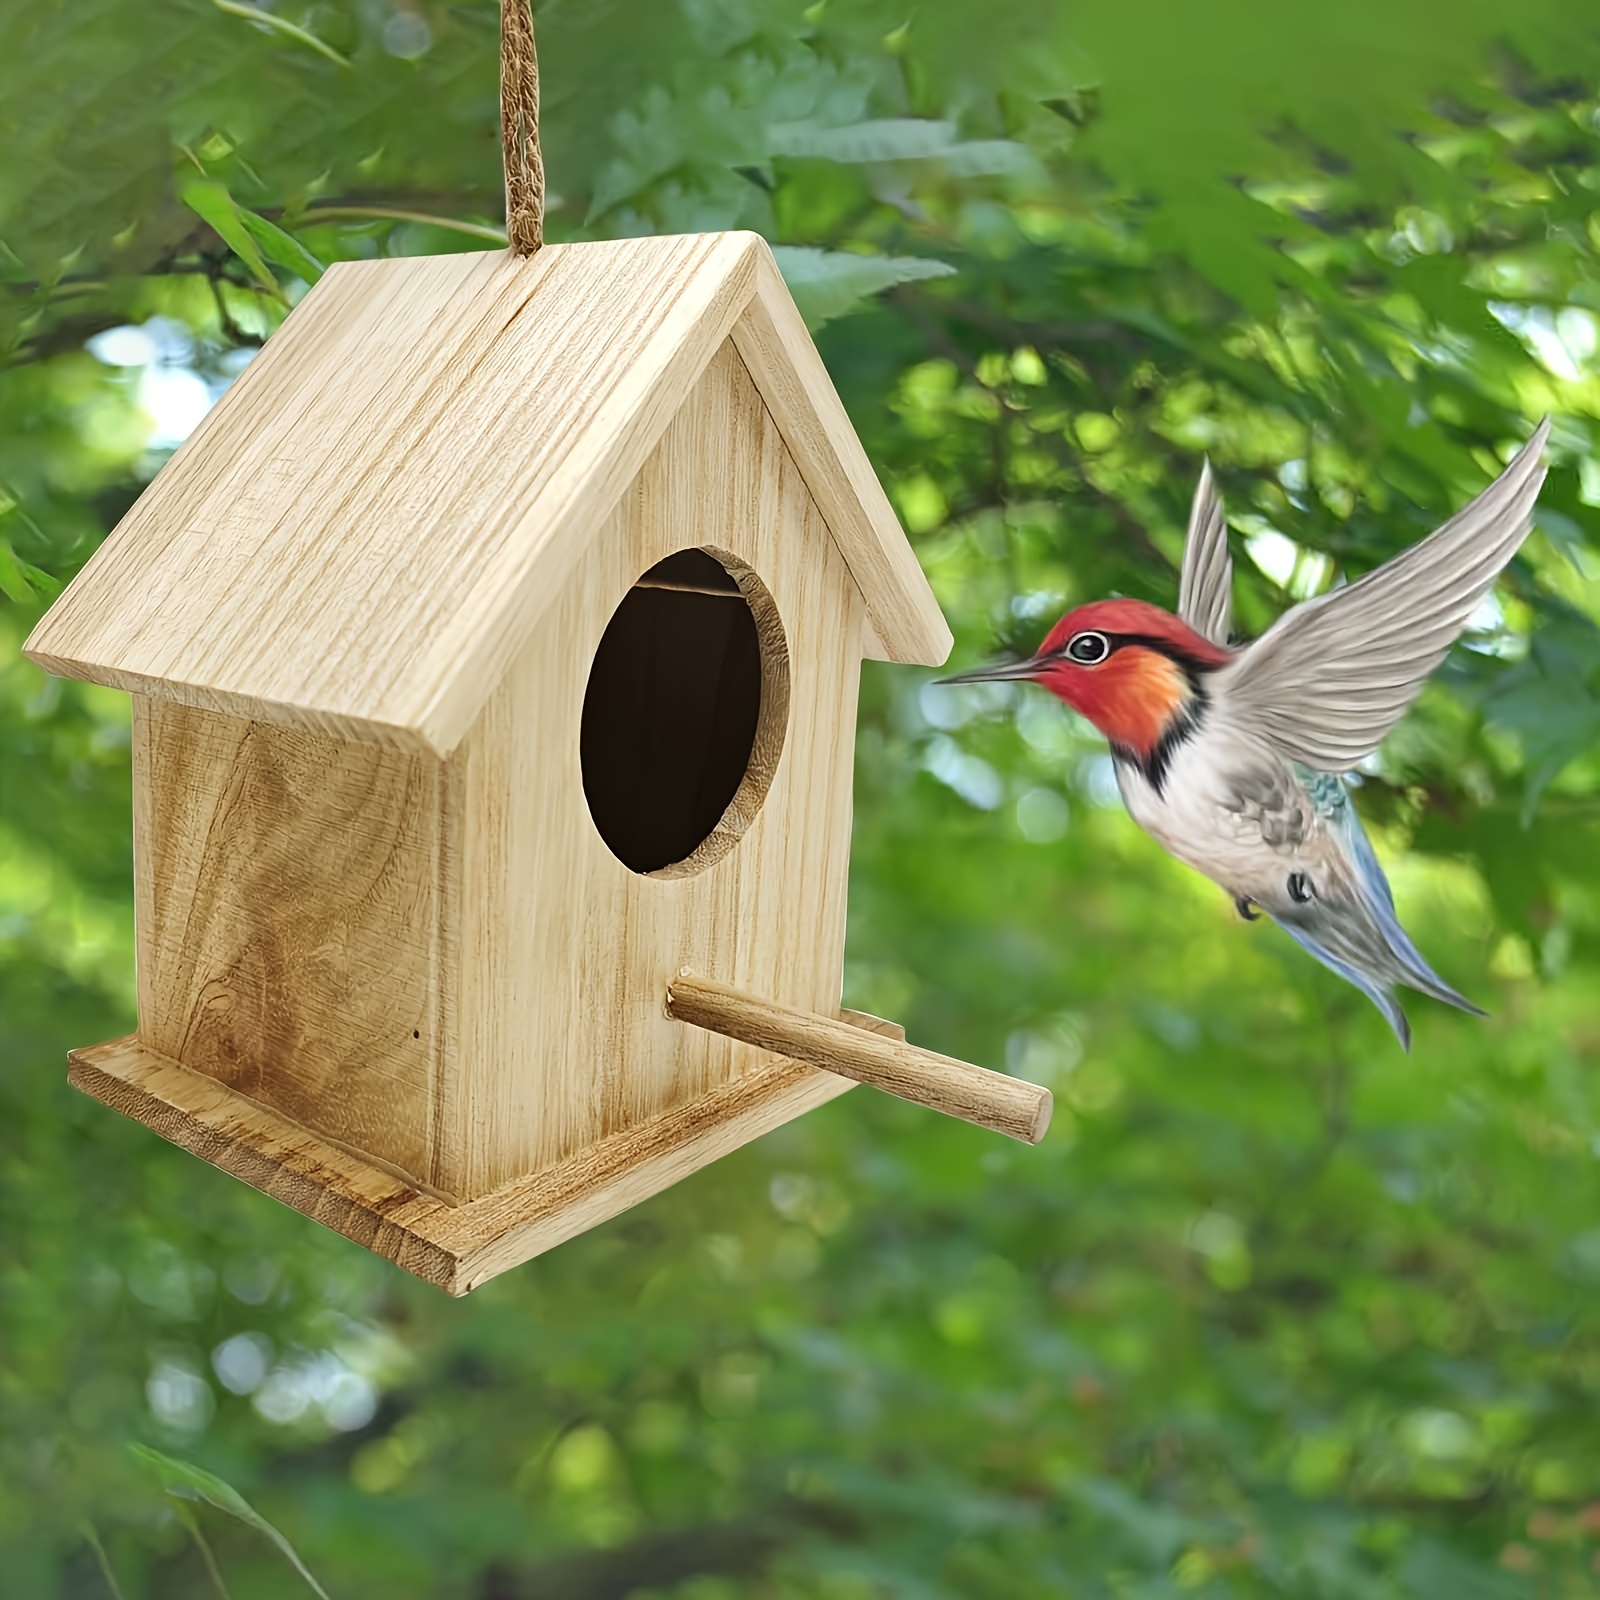 

Rustic Wooden Birdhouse - Outdoor Hanging Bird Feeder Nest Villa For Garden Tree | Durable Wood Bird Home Shelter - Ideal For Hummingbirds And Small Birds